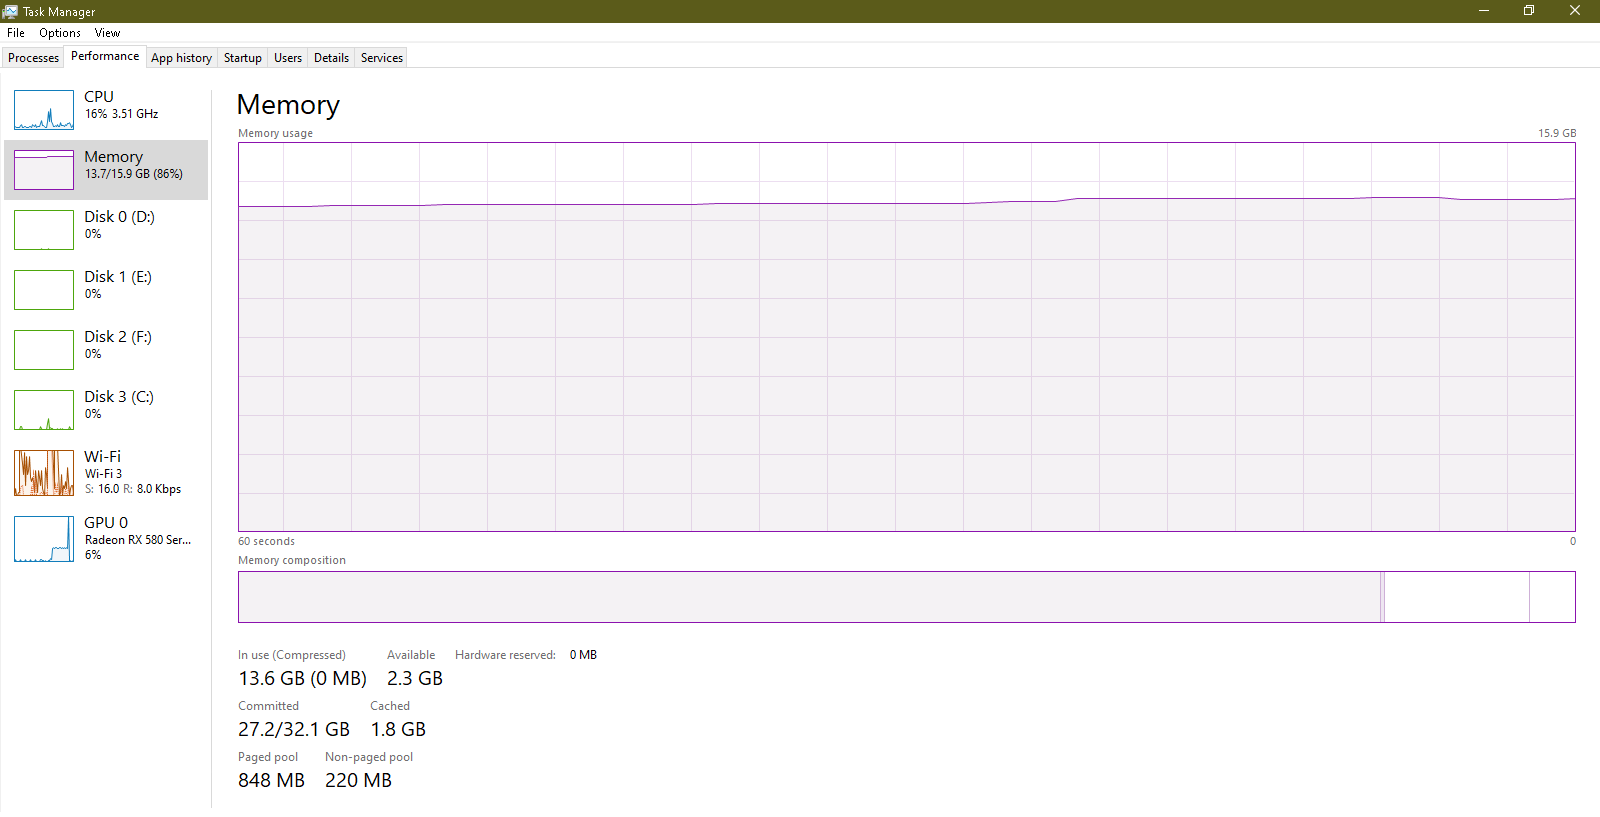 WINDOWS SERVICES USING UP ALL OF MY RAM d23d61e1-cd87-4dad-815d-0f41eeba3b3f?upload=true.png